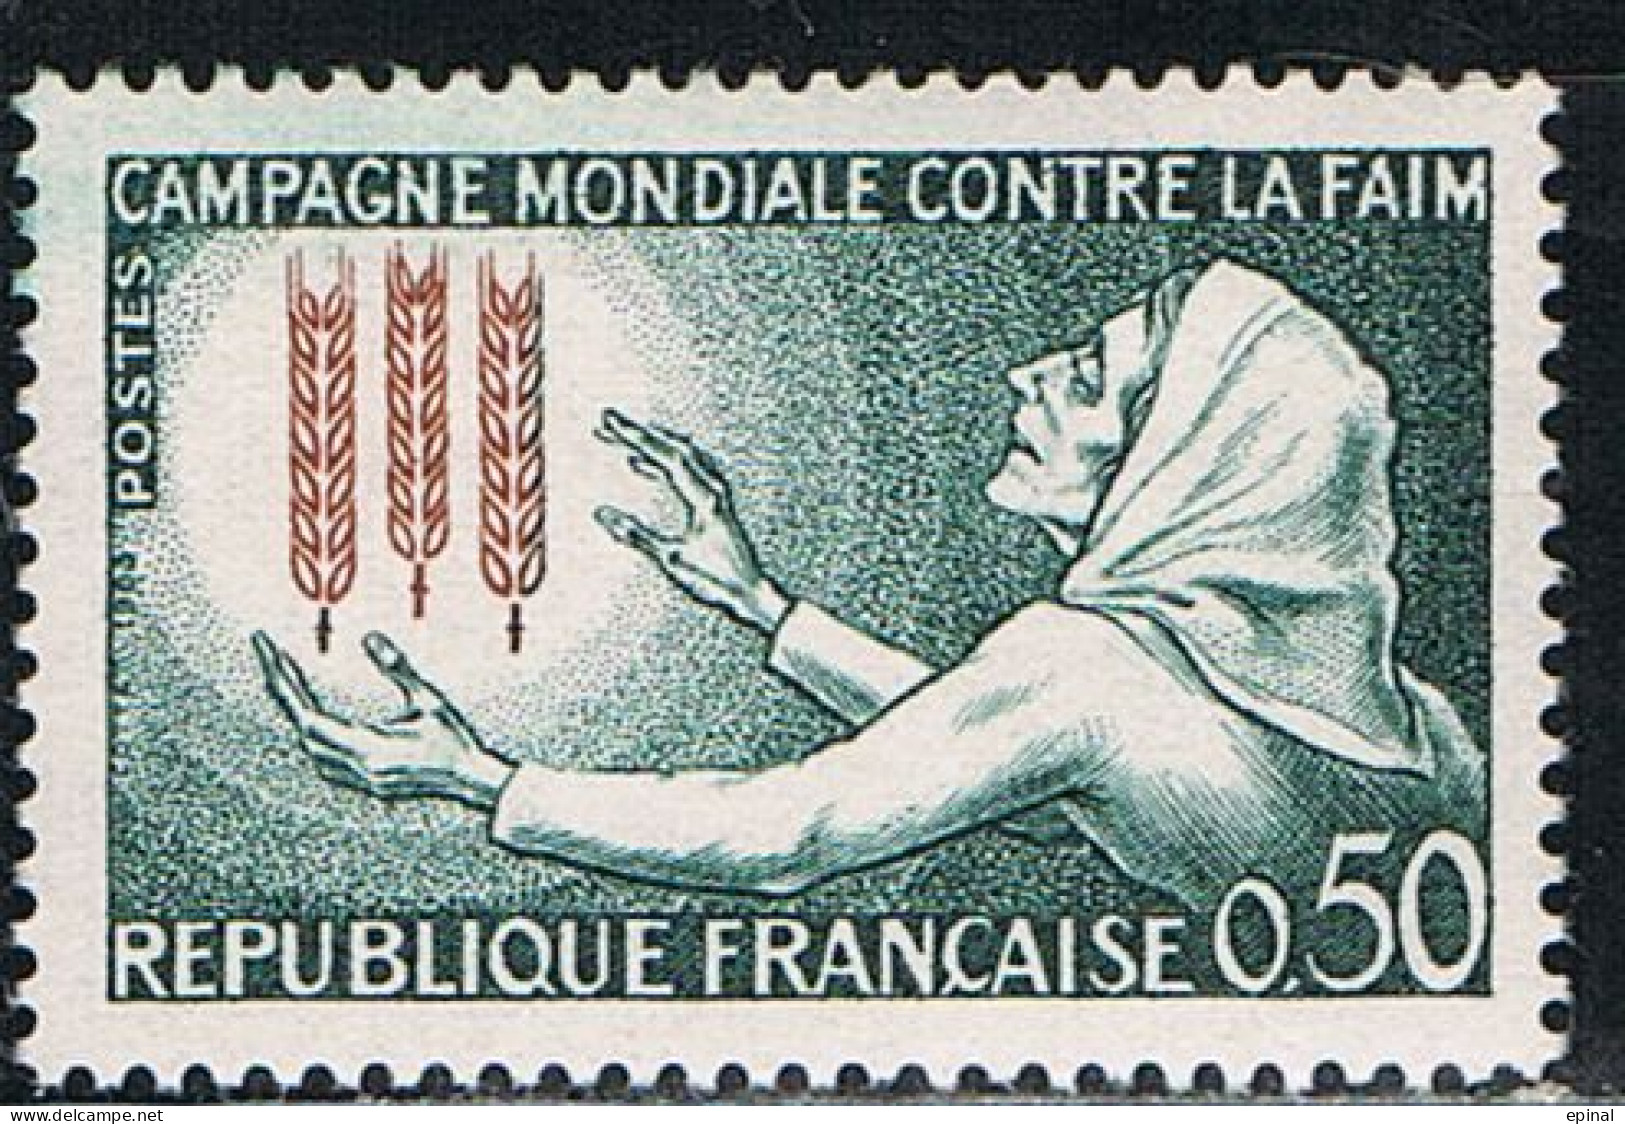 FRANCE : N° 1379 ** (Campagne Mondiale Contre La Faim) - PRIX FIXE - - Unused Stamps